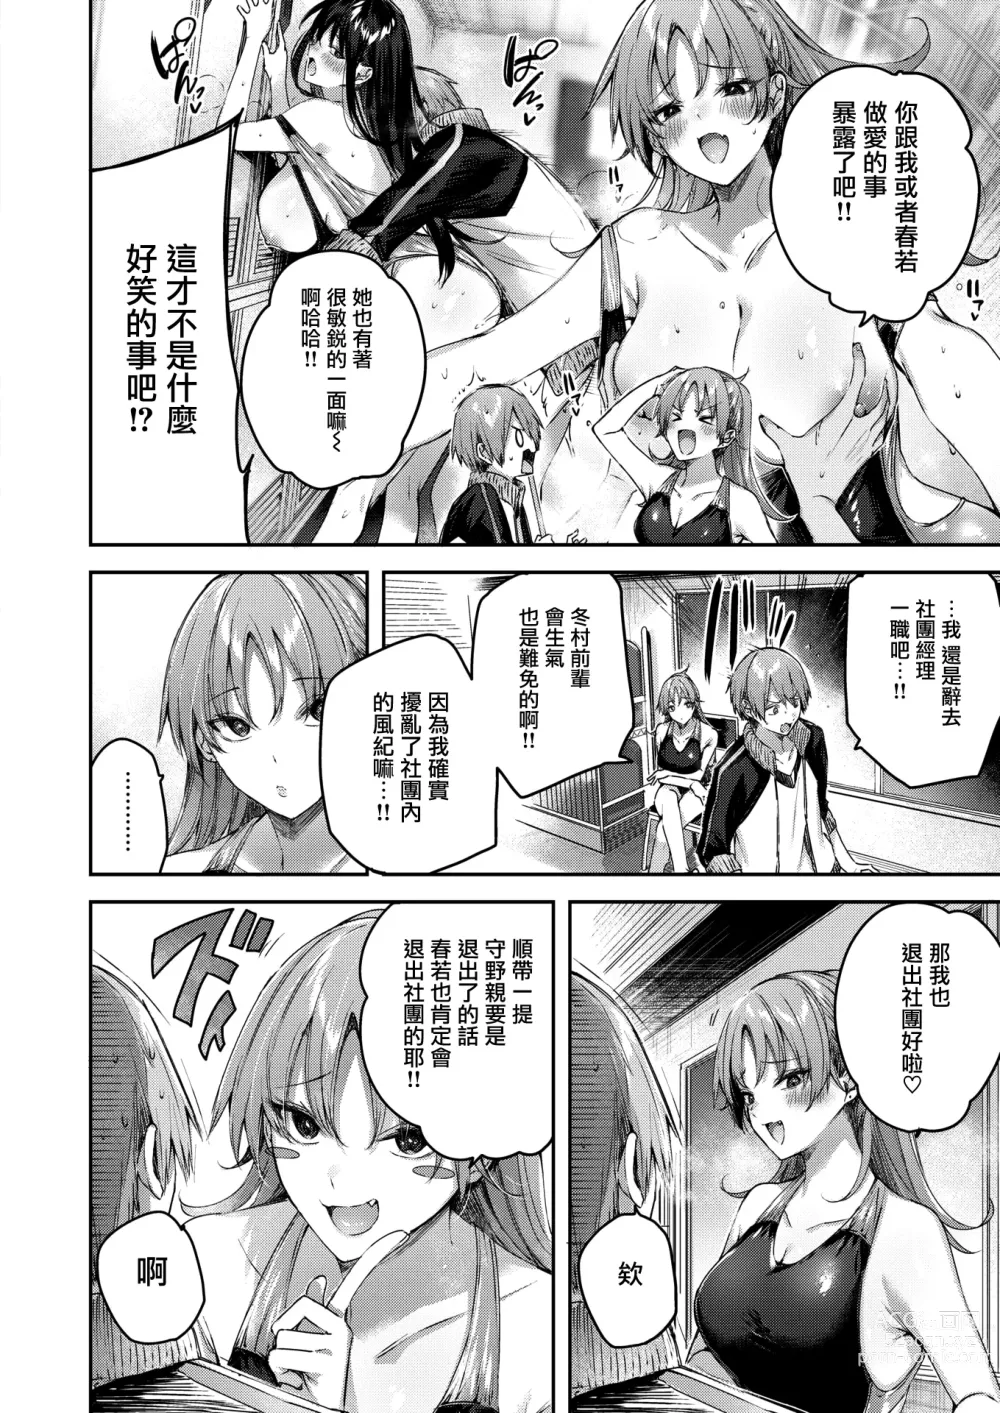 Page 6 of manga Cold Fish